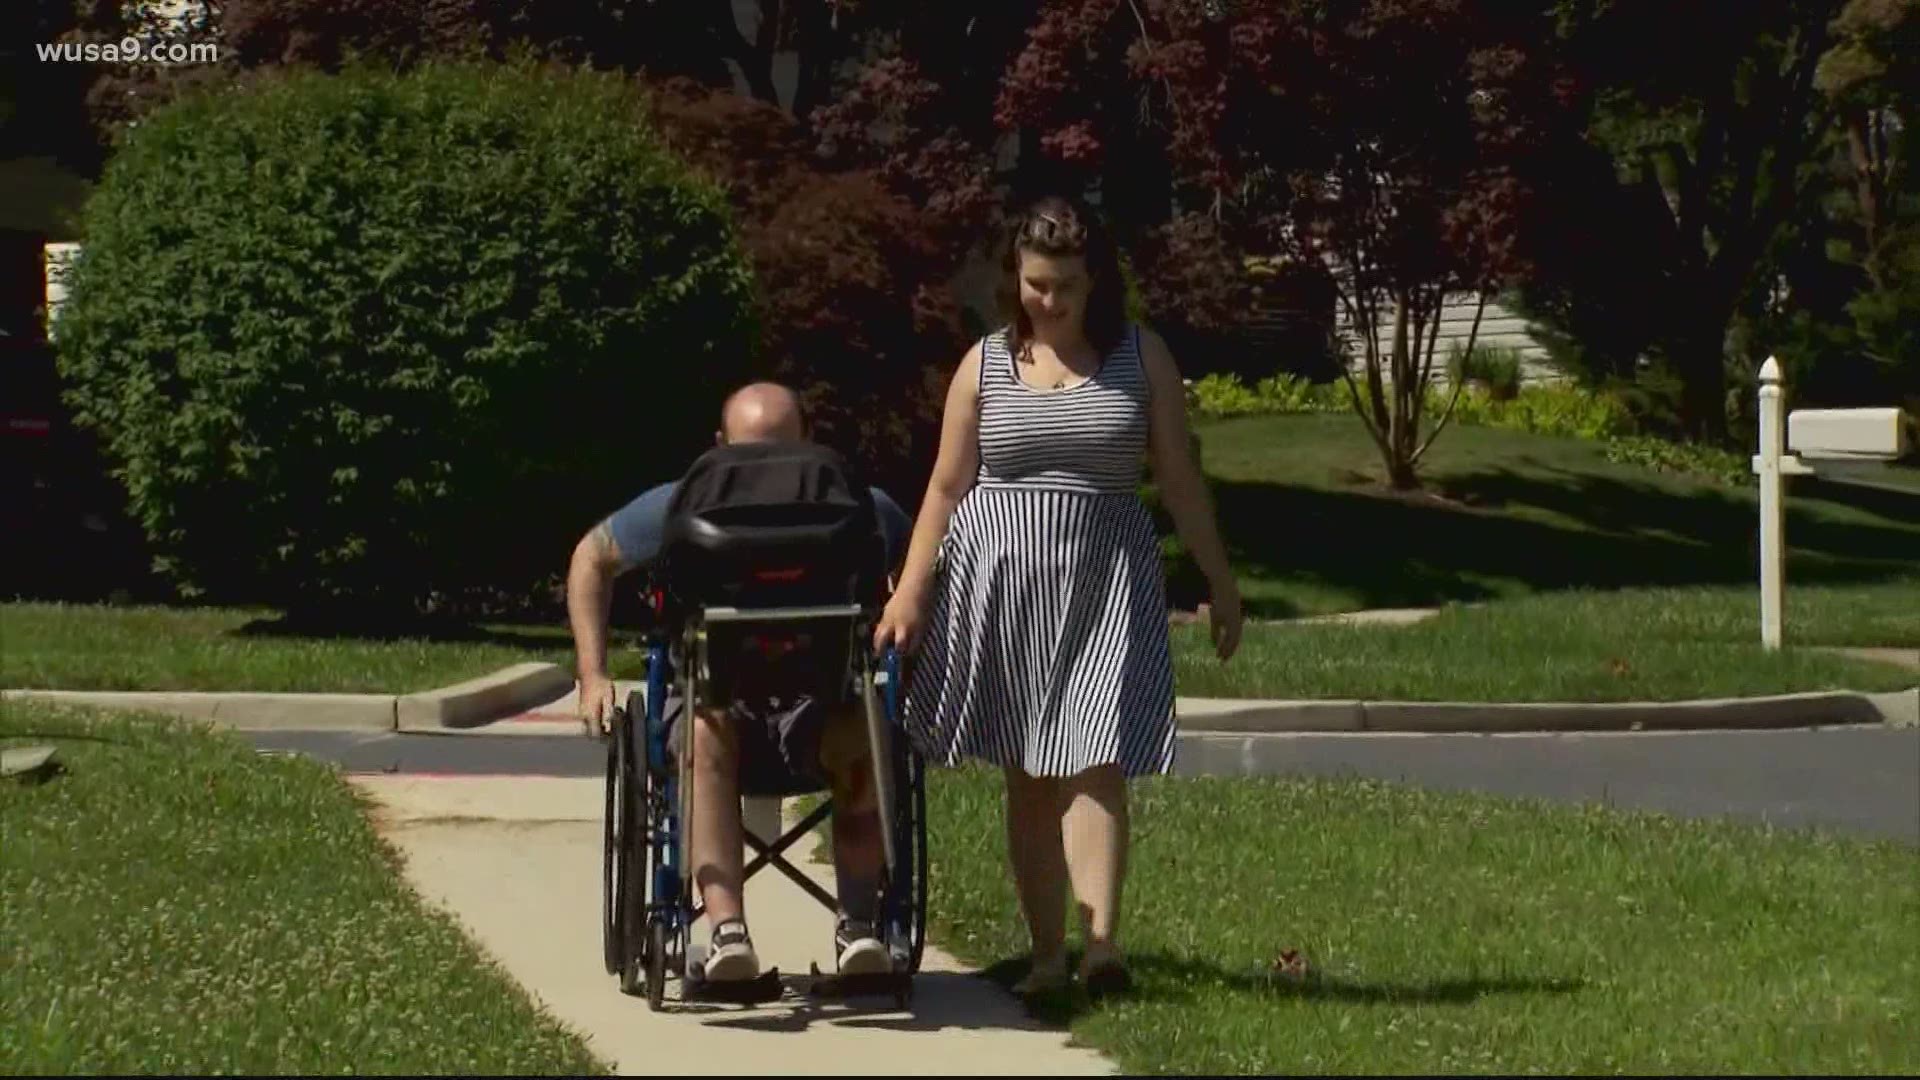 Students a Bullis School adapted a wheelchair to help a man who had brain surgery take his newborn son for a walk.